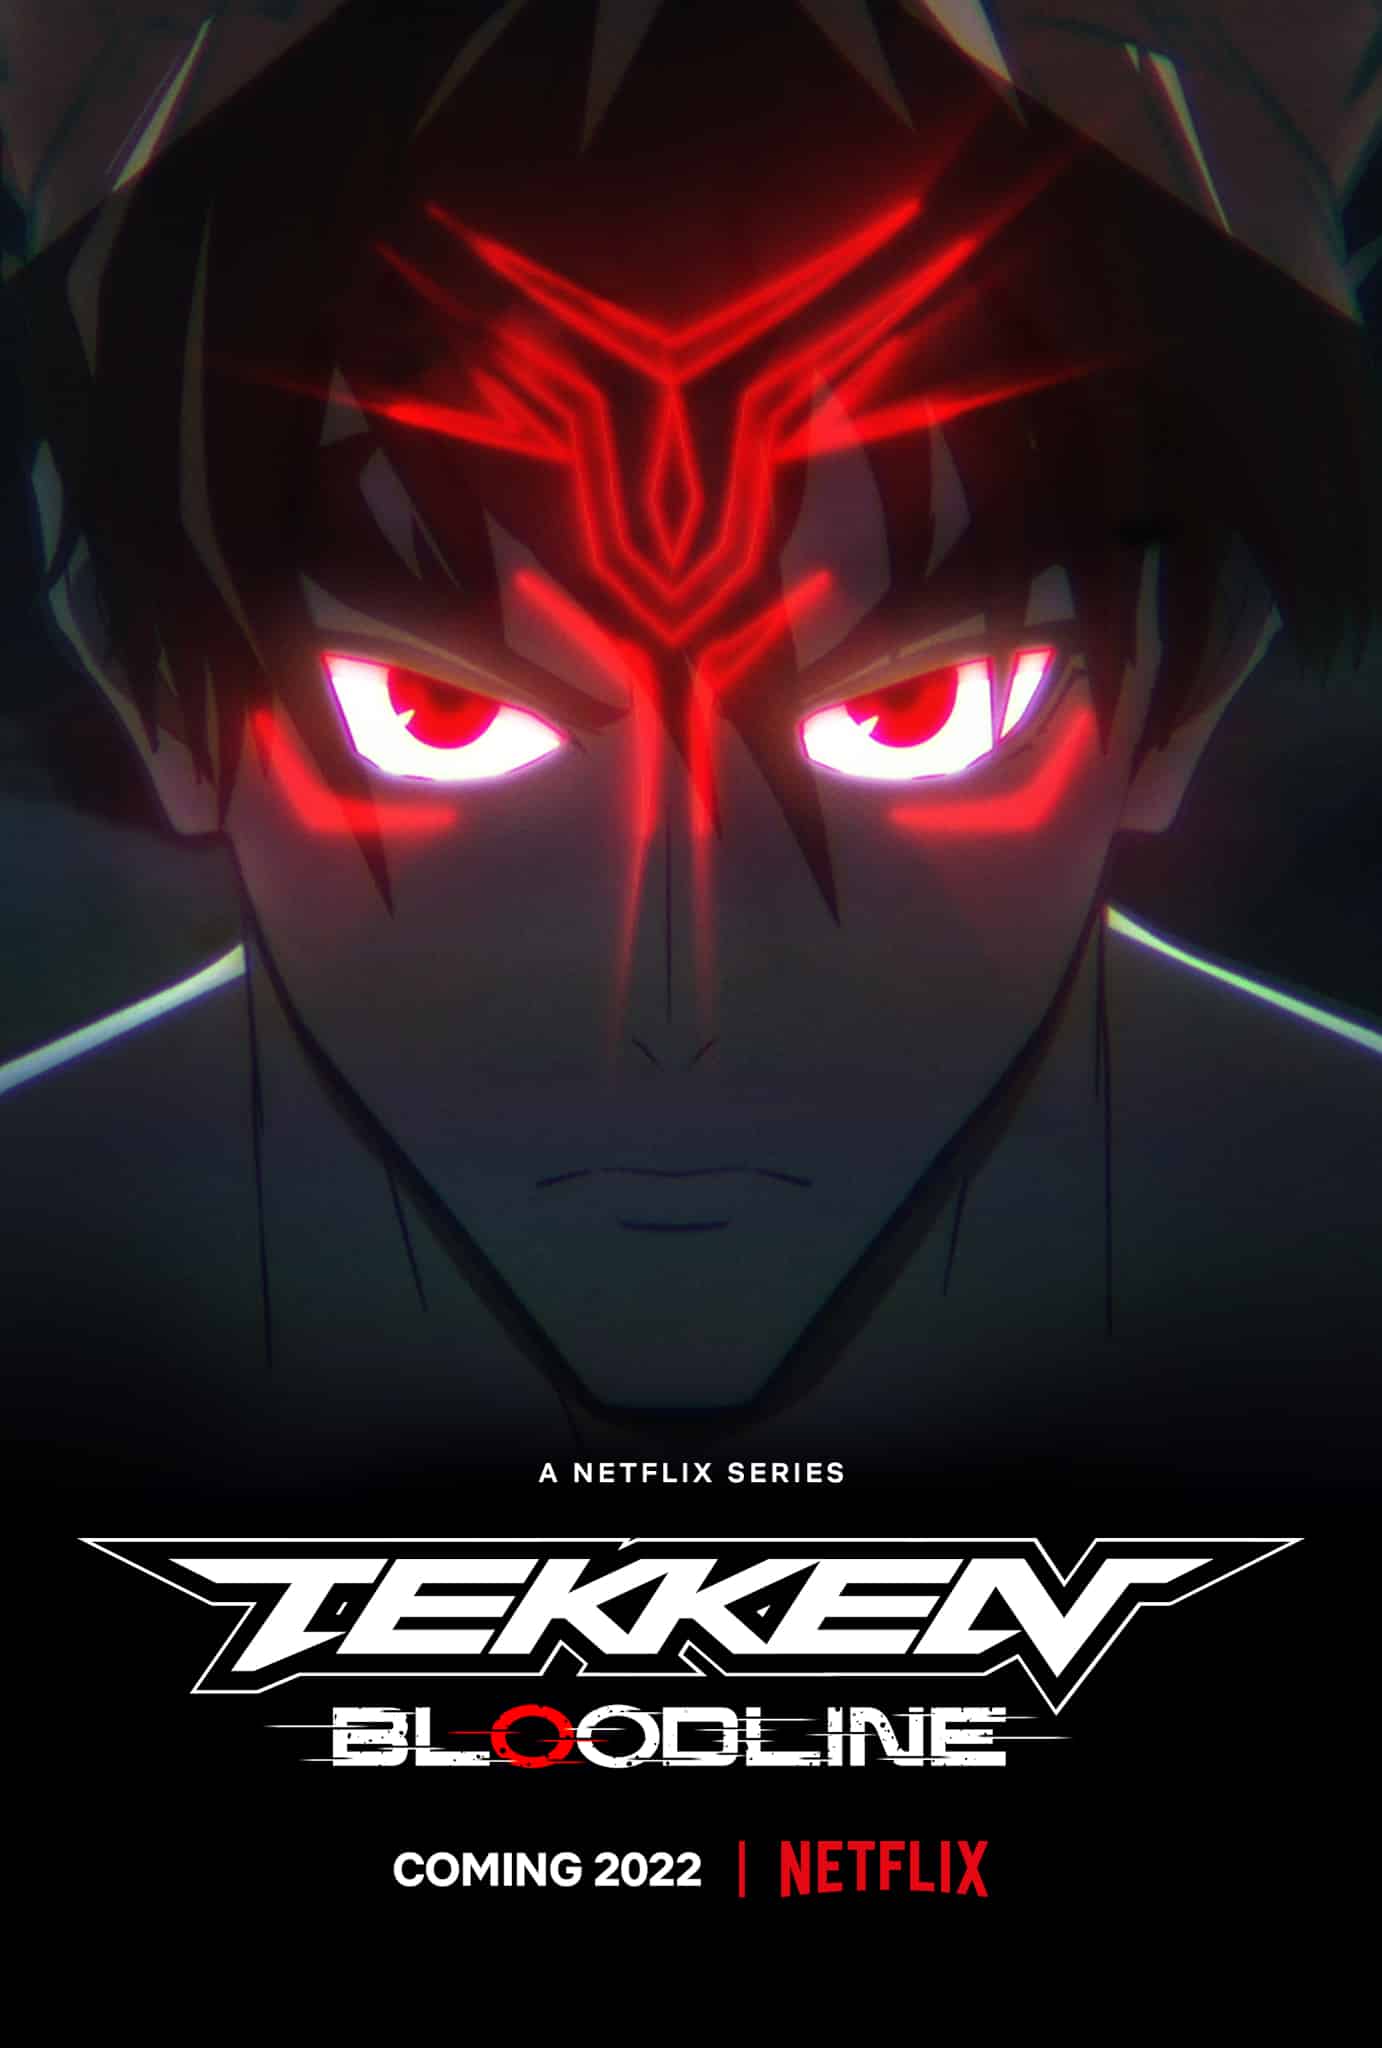 Premier visuel pour lanime Tekken : Bloodline